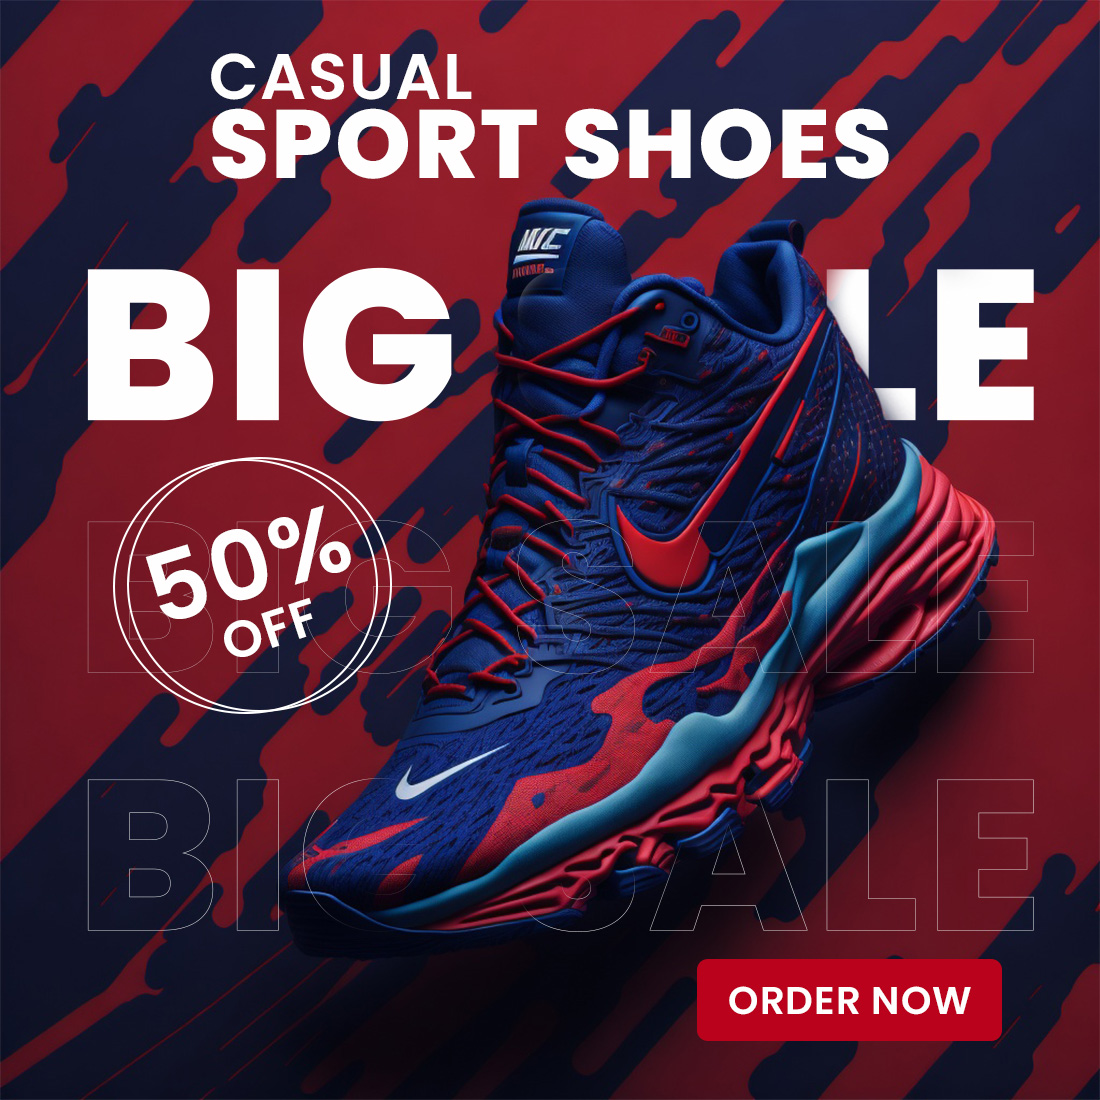 big sale shoes social media post preview image.